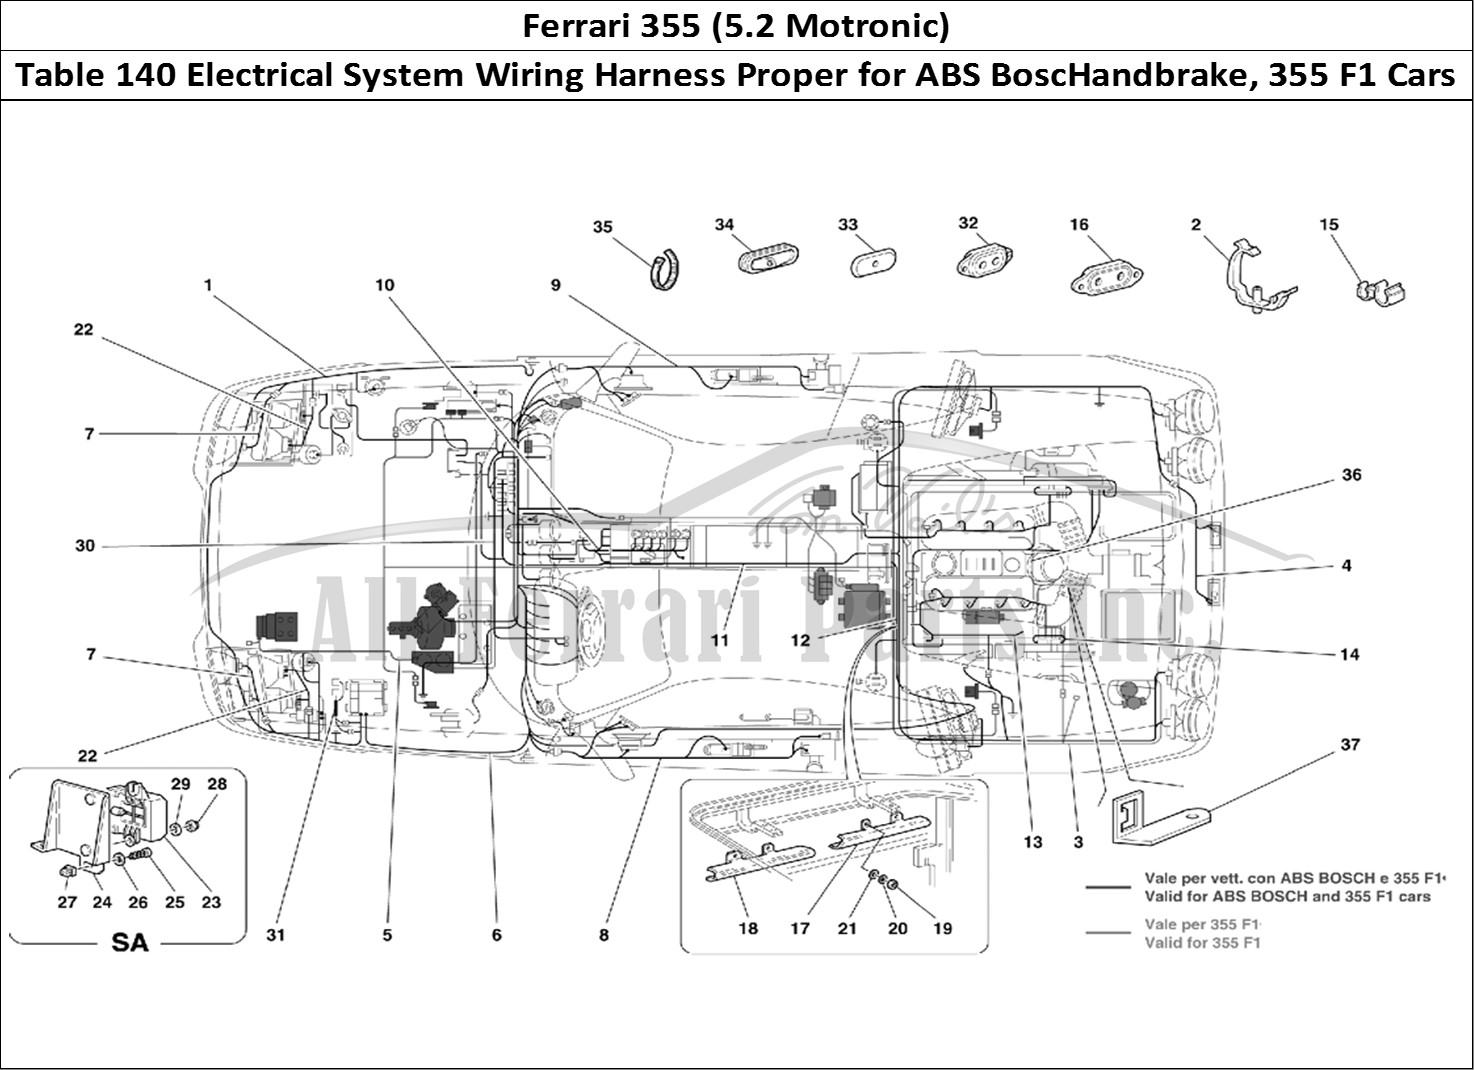 Ferrari Parts Ferrari 355 (5.2 Motronic) Page 140 Electrical System -Valid